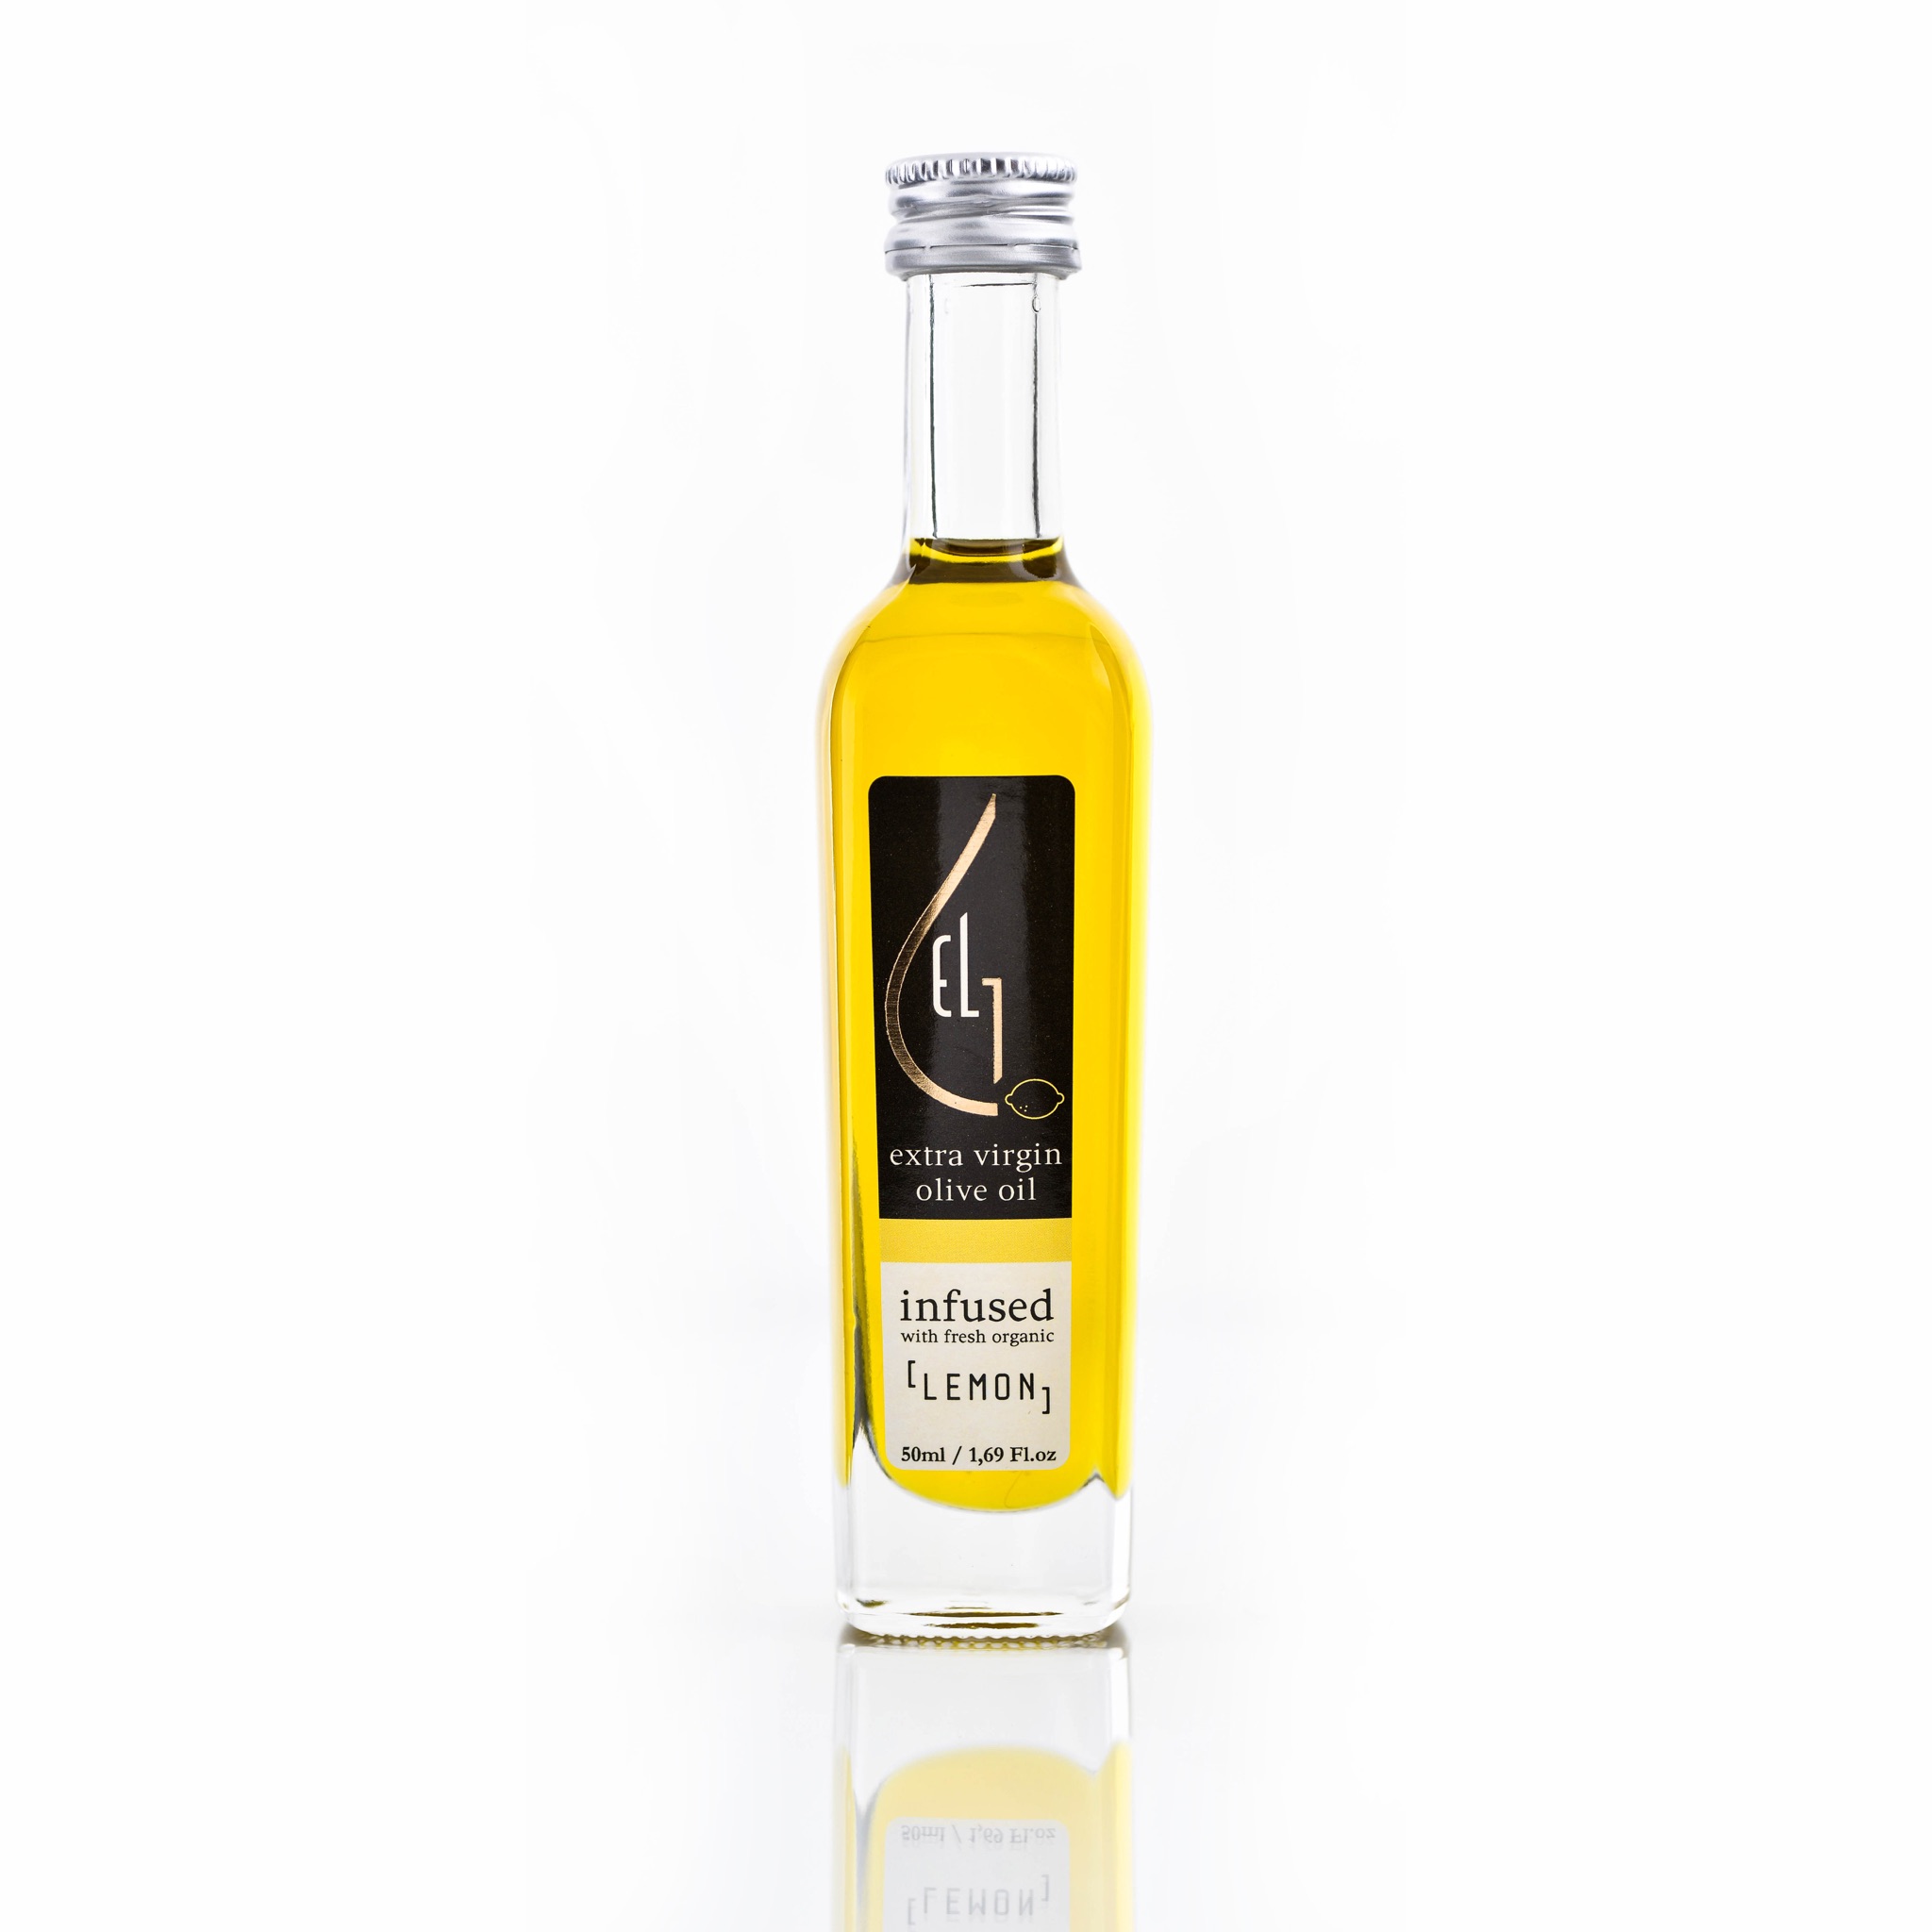 Pellas Nature Lemon infused Olive Oil 1.69 iz Bottle